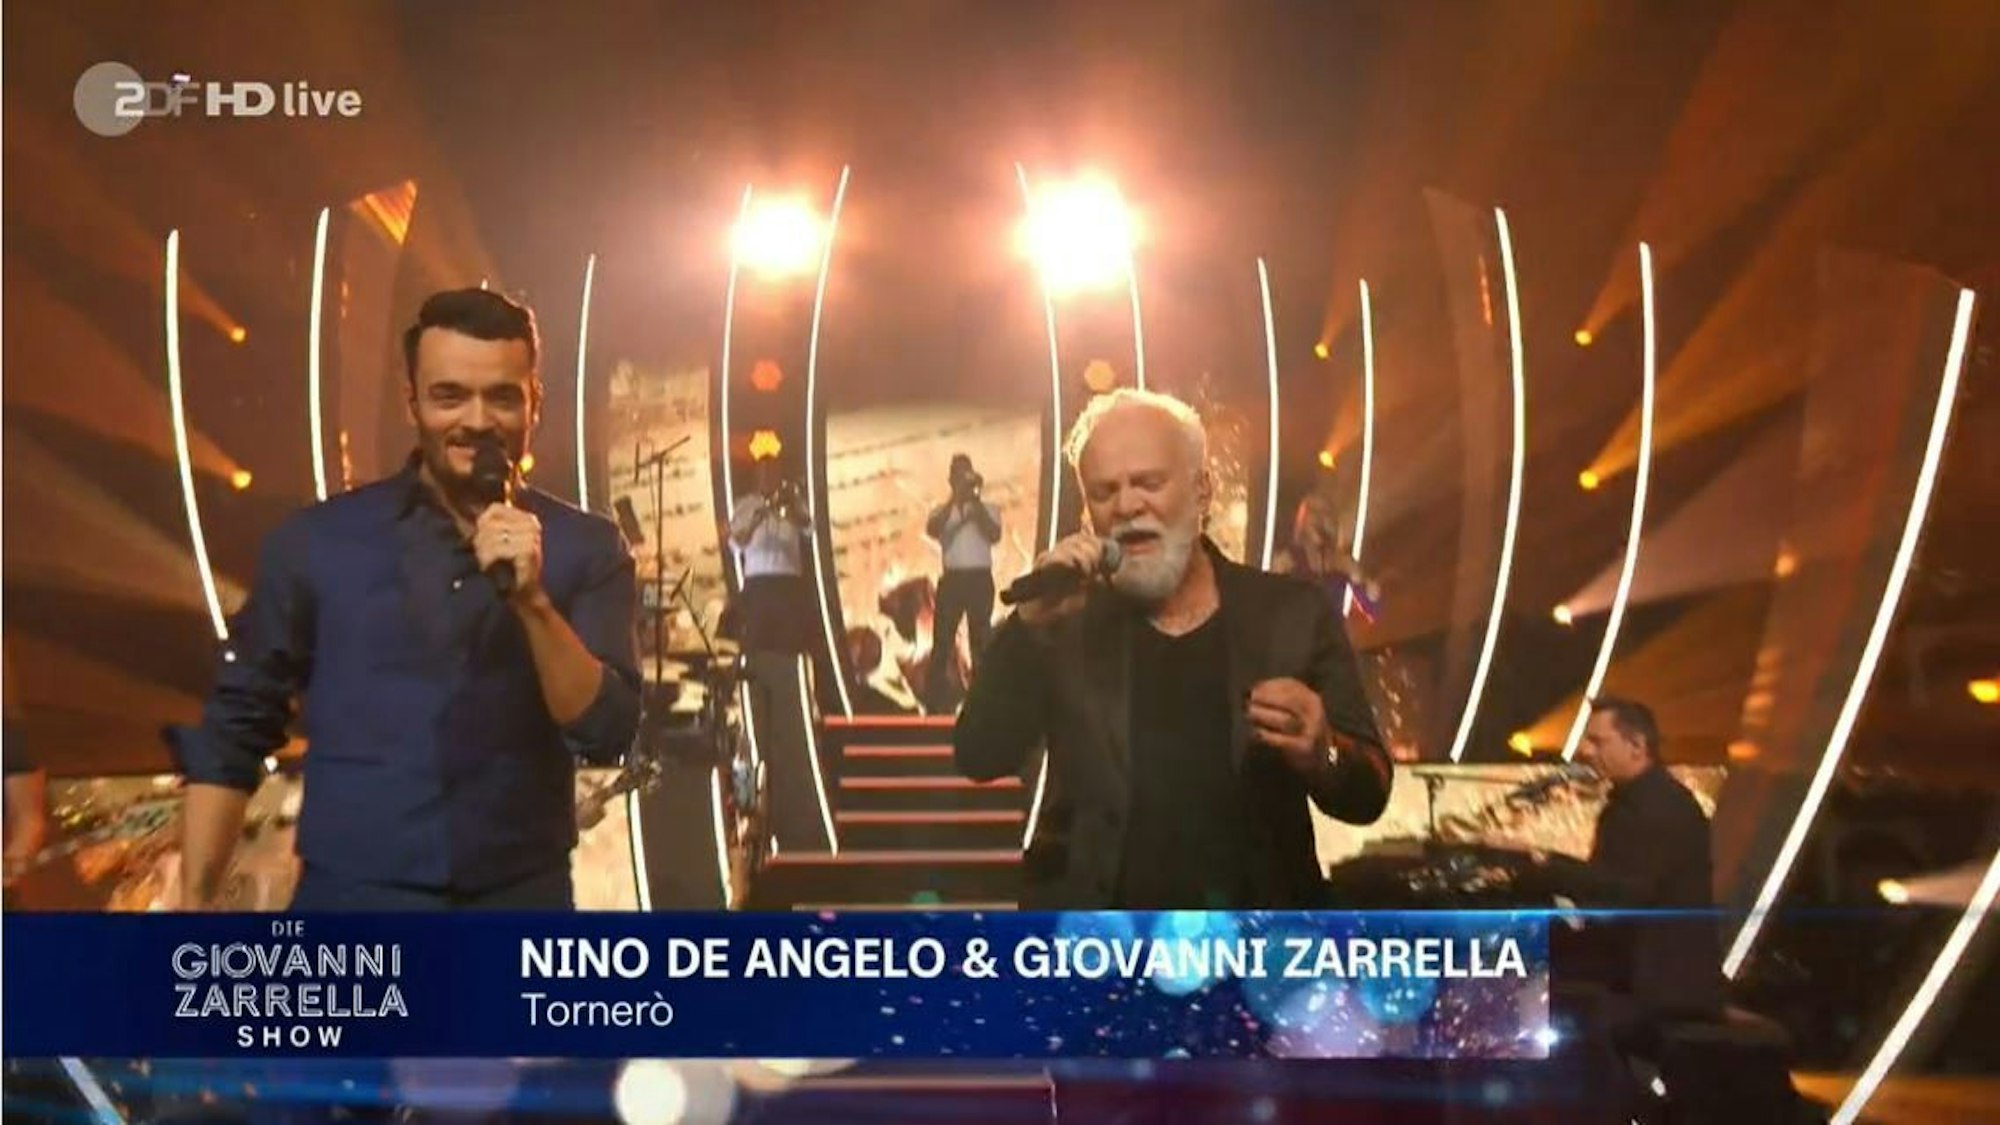 Giovanni Zarrella und Nino de Angelo singen am 12.2.2022 in der "Giovanni Zarrella Show " im ZDF
Foto: Screenshot/ZDF